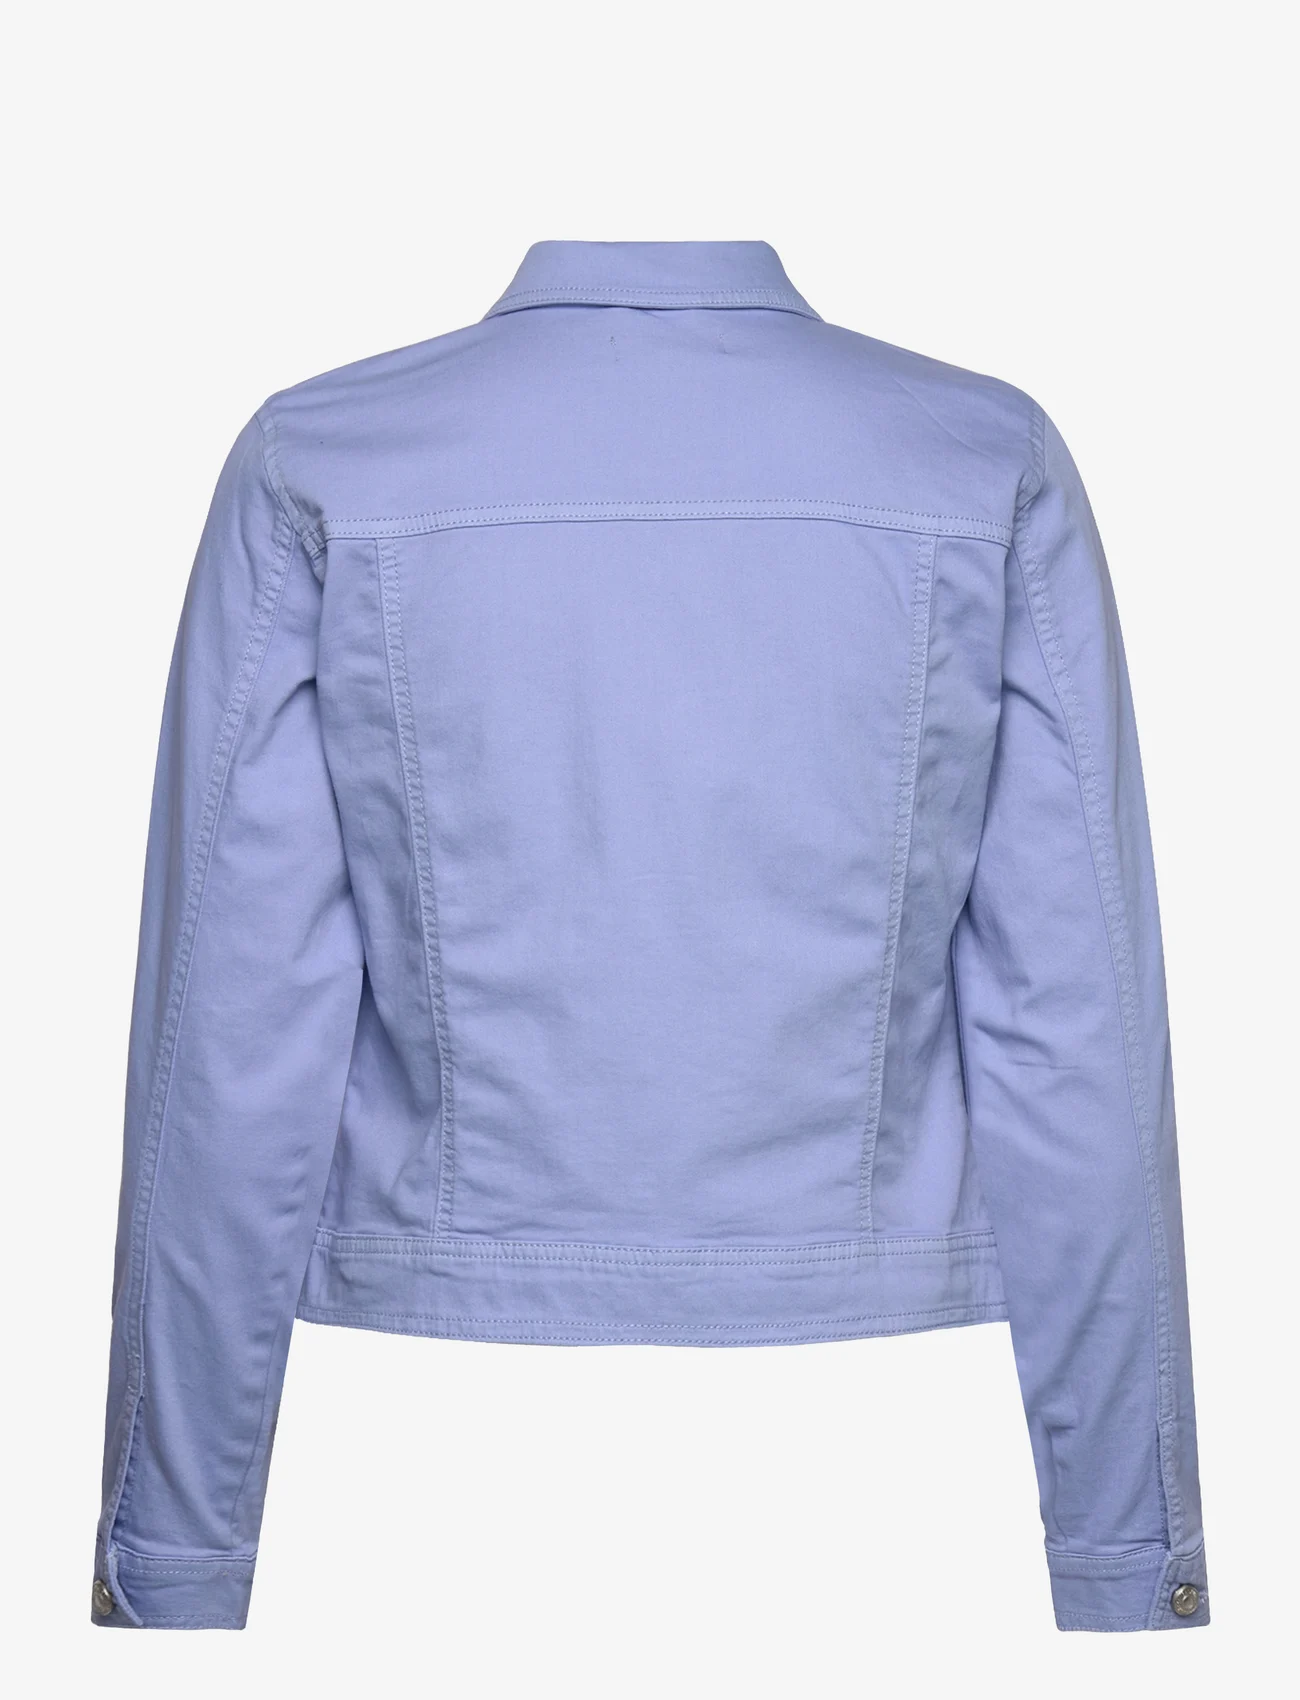 Fransa - FRVOTWILL 1 Jacket - spring jackets - hydrangea - 1